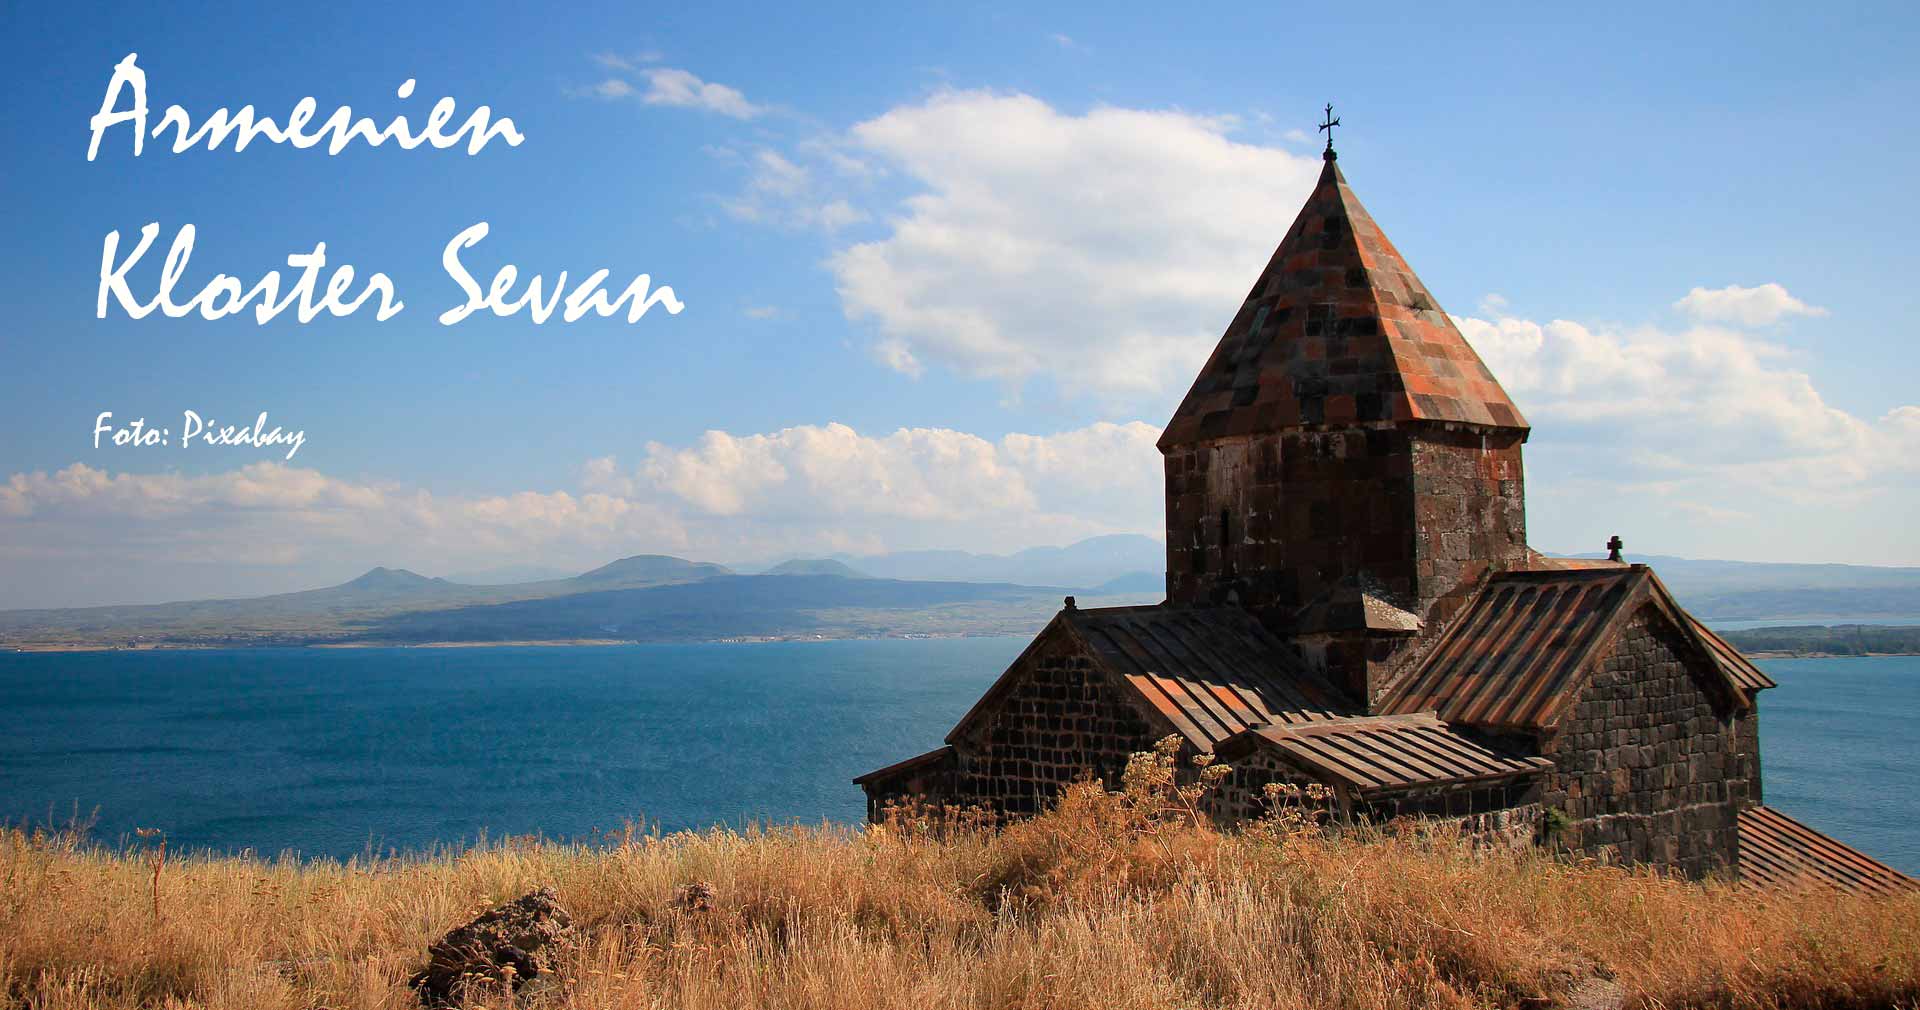 Armenien, Kloster Sevan